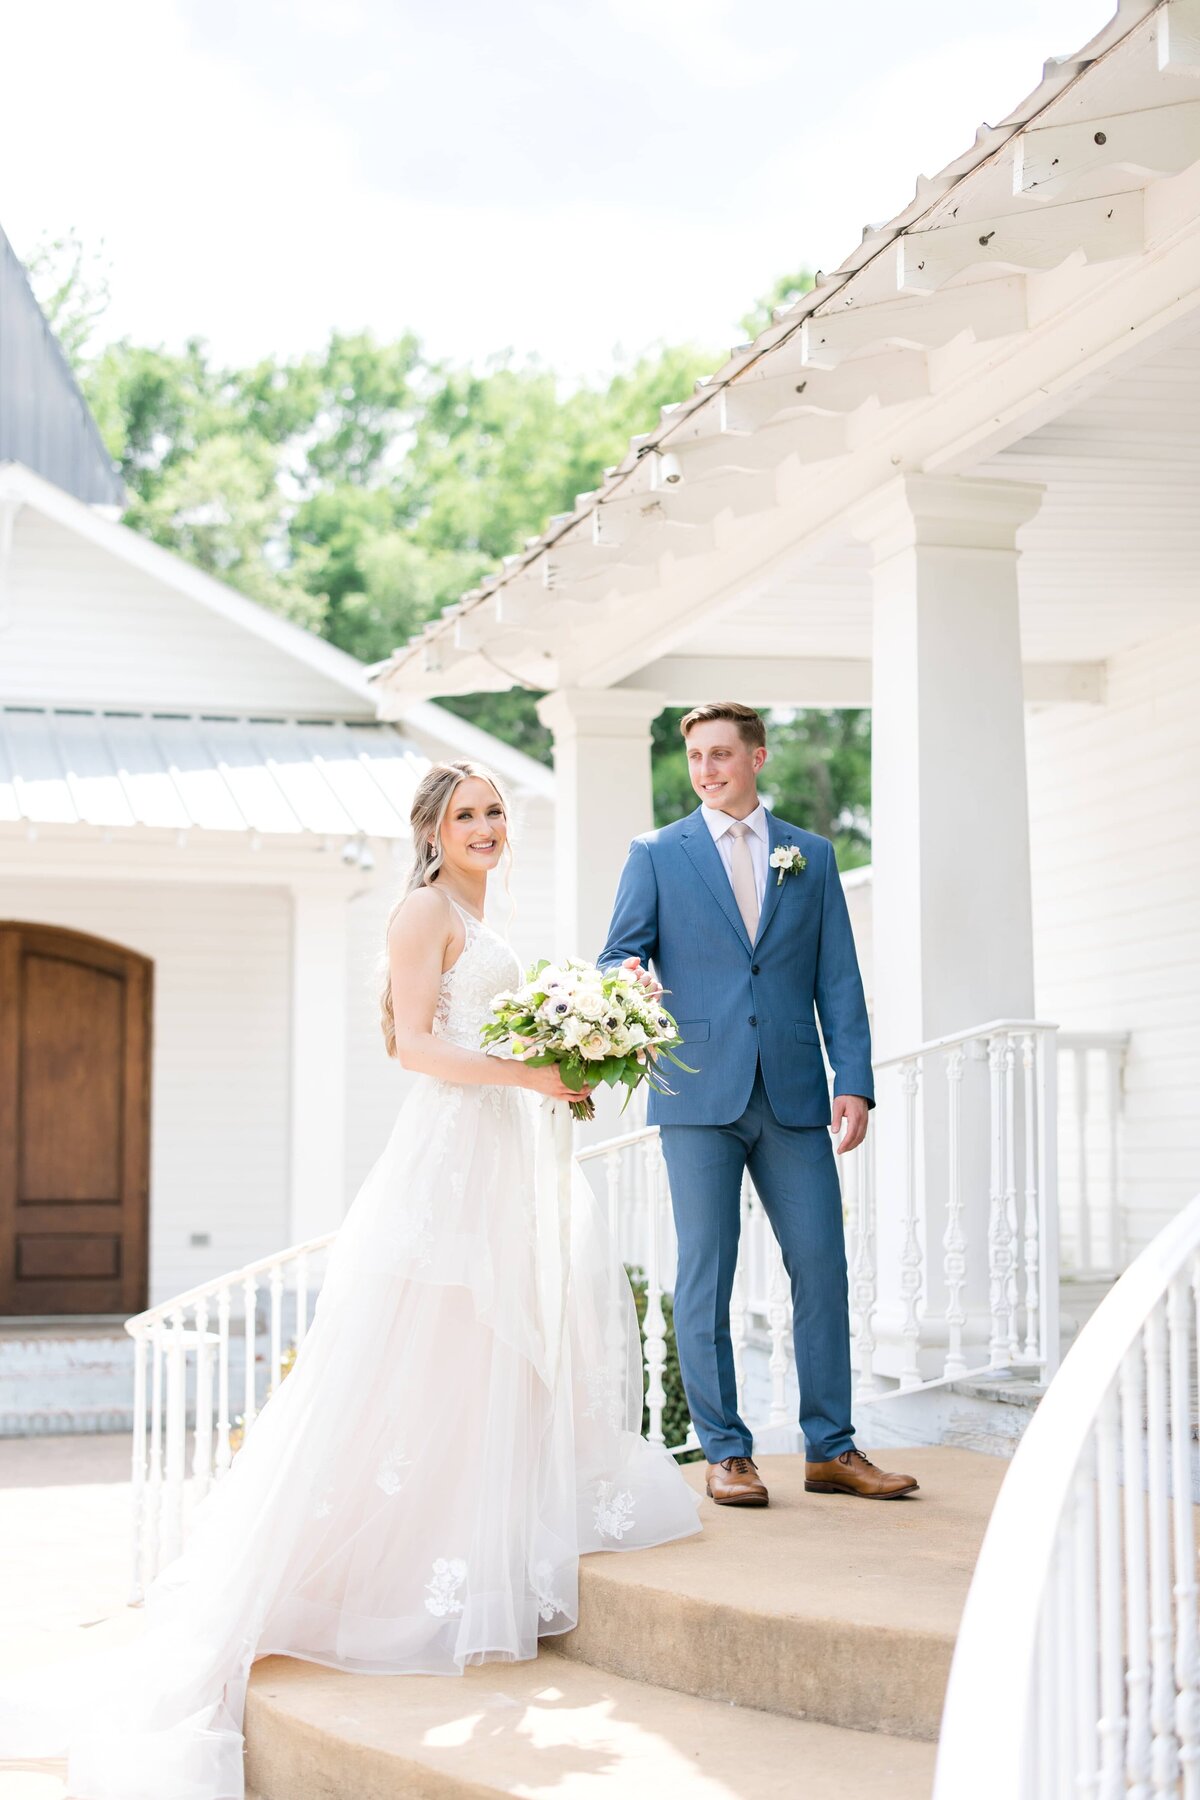 Samantha & Connor's Spring Wedding at the Sonnet House - Katie & Alec Photography Birmingham, Alabama Wedding Photographers 3